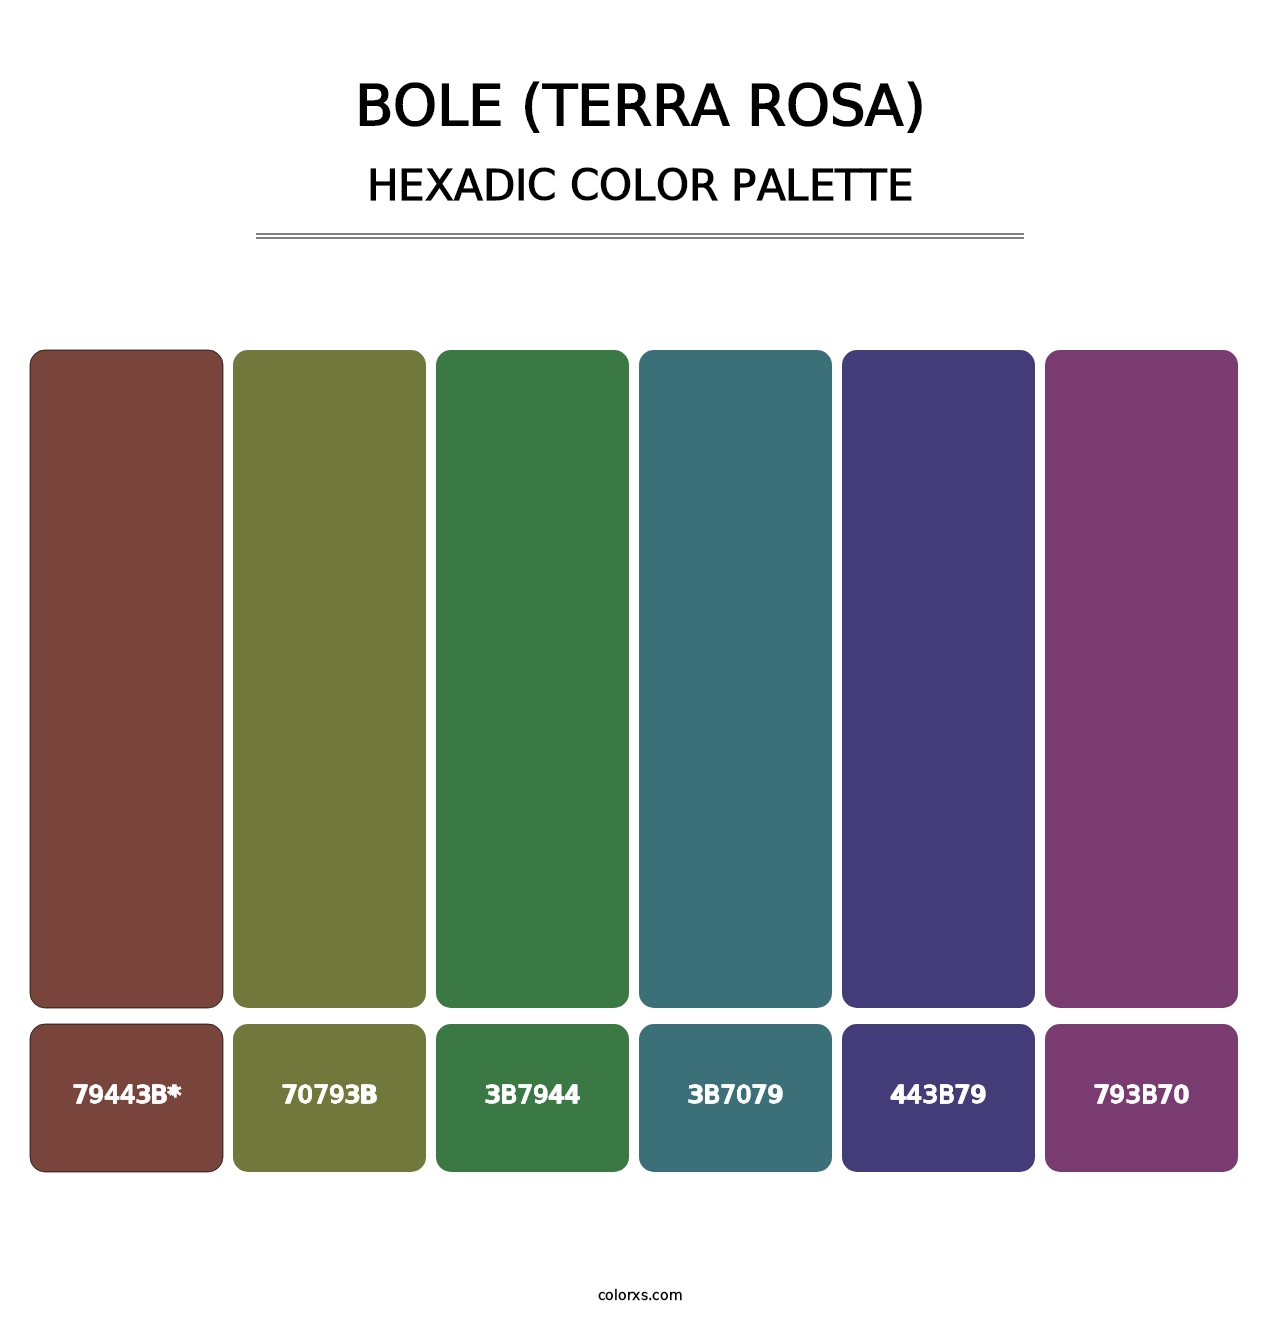 Bole (Terra Rosa) - Hexadic Color Palette